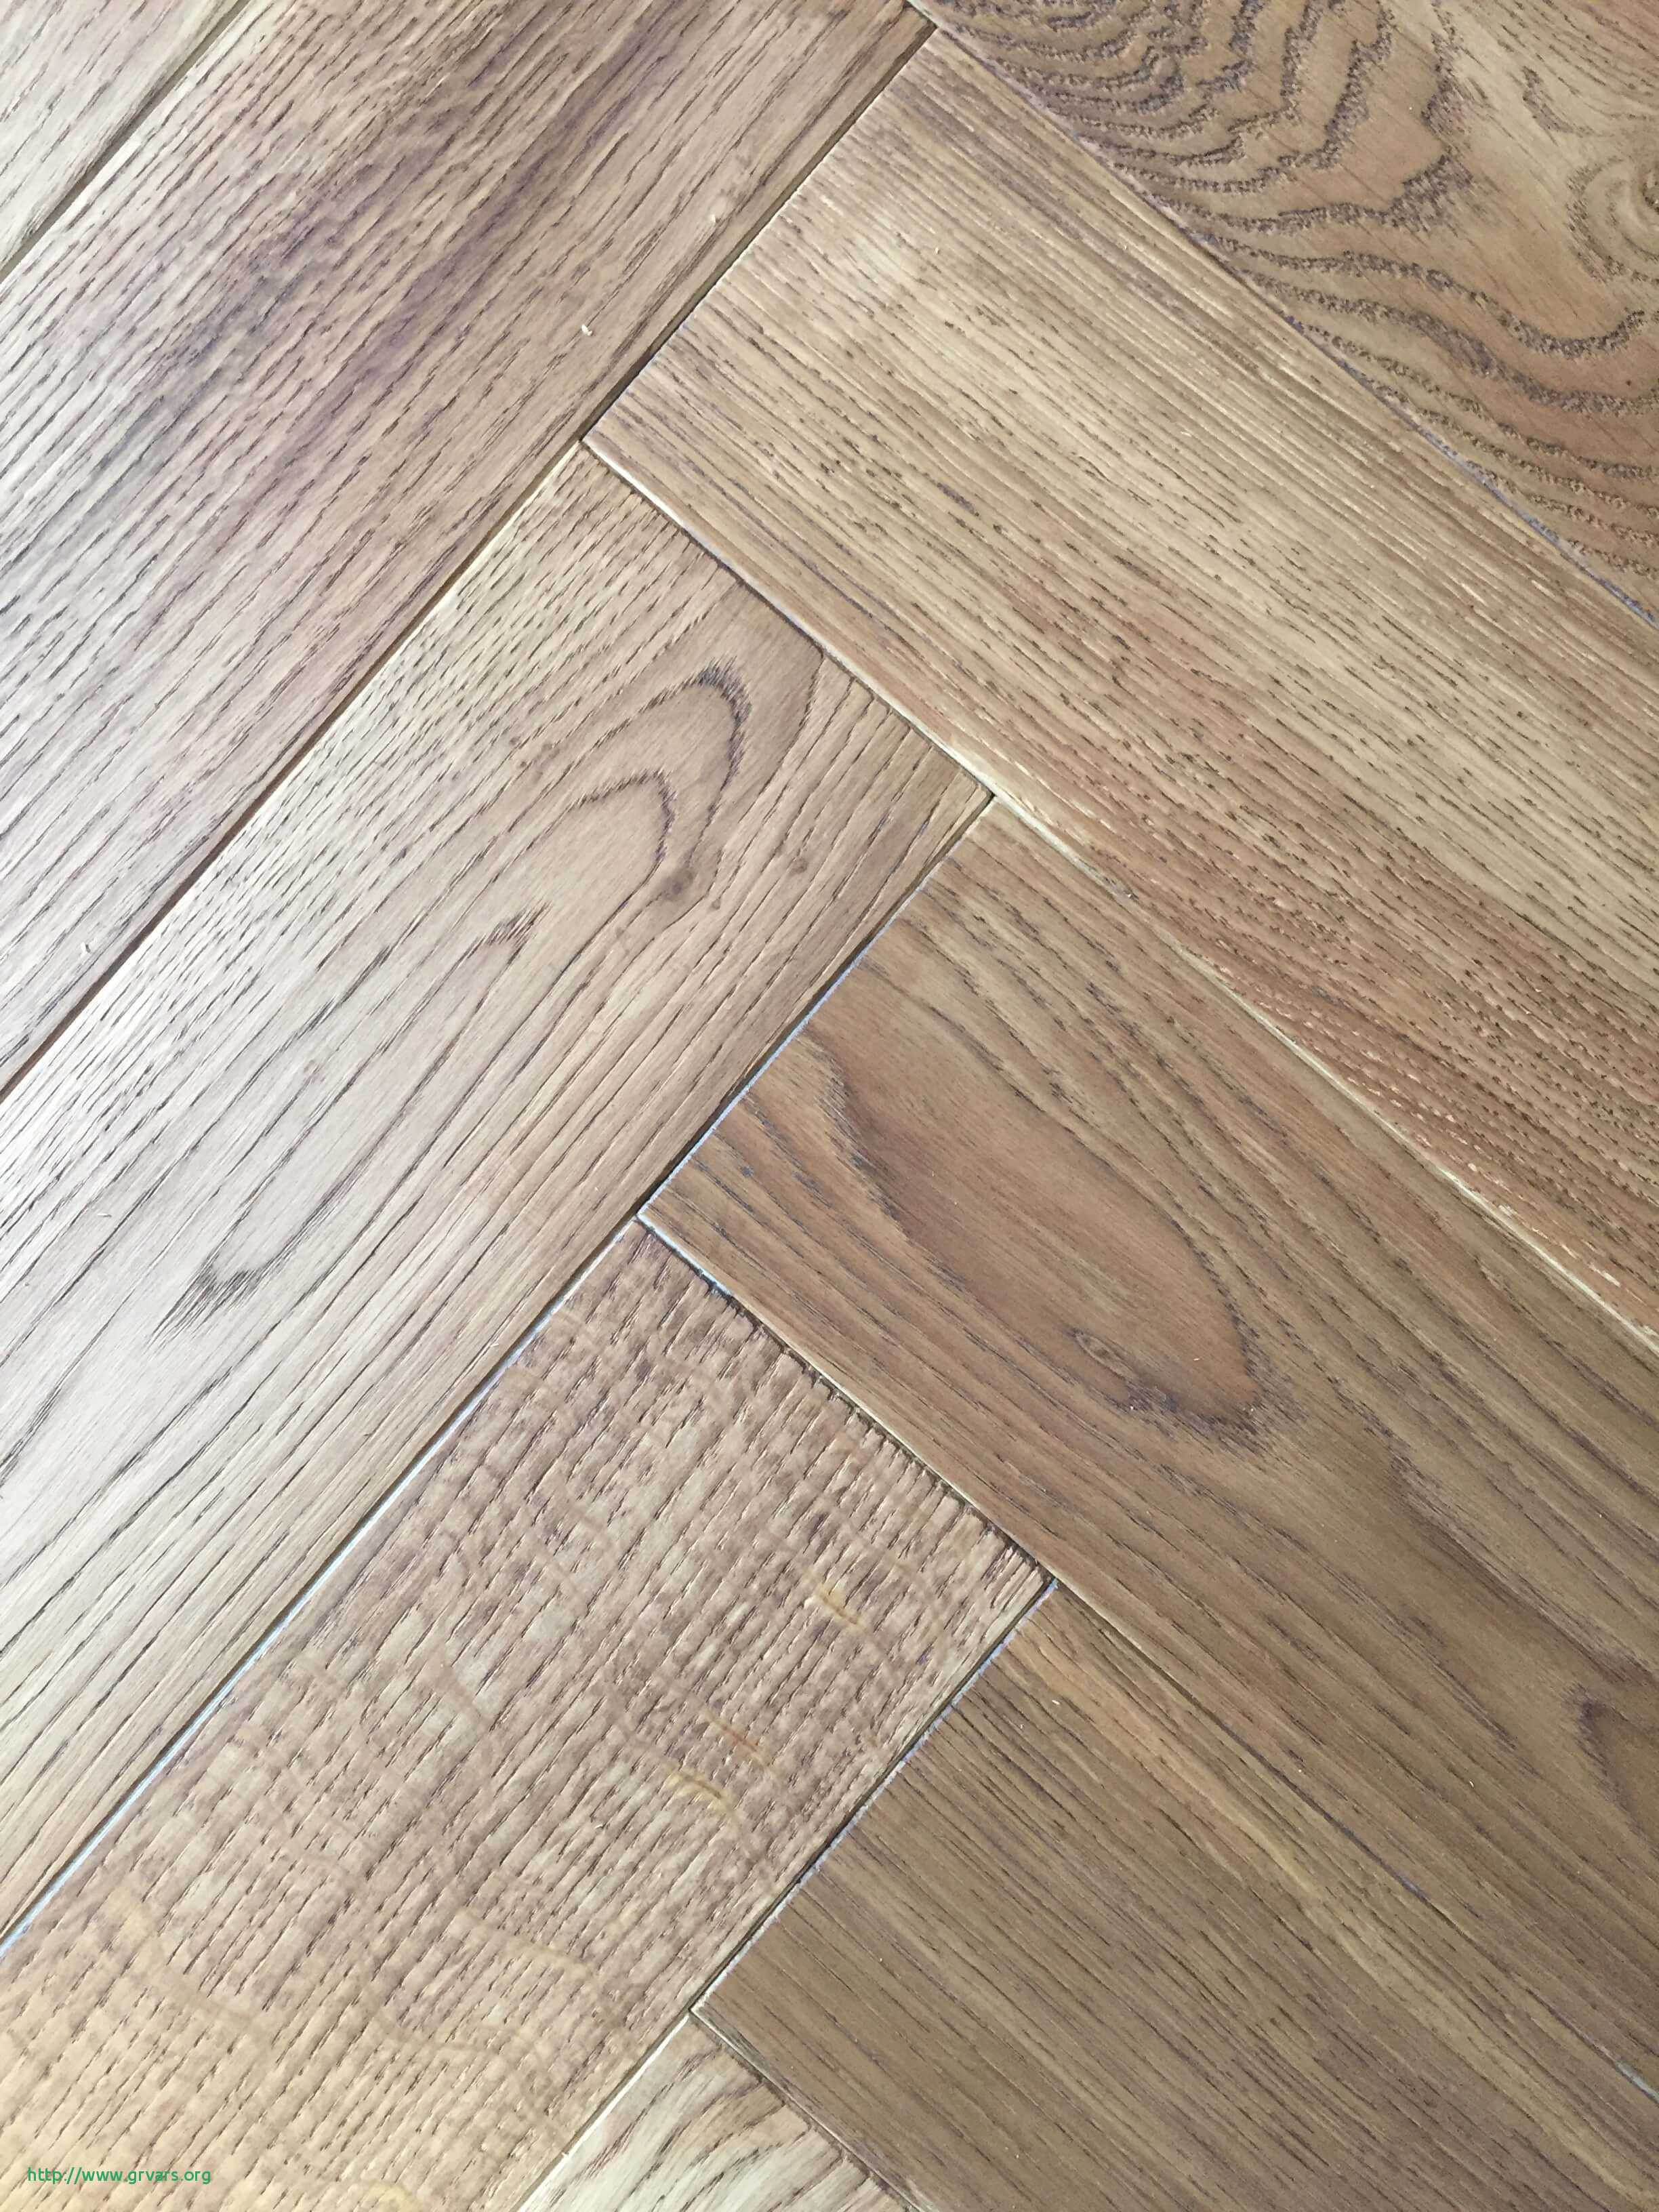 hardwood flooring suppliers nj of 20 alagant best place to purchase laminate flooring ideas blog pertaining to nj best best best place to purchase laminate flooring charmant laminate flooring ideas